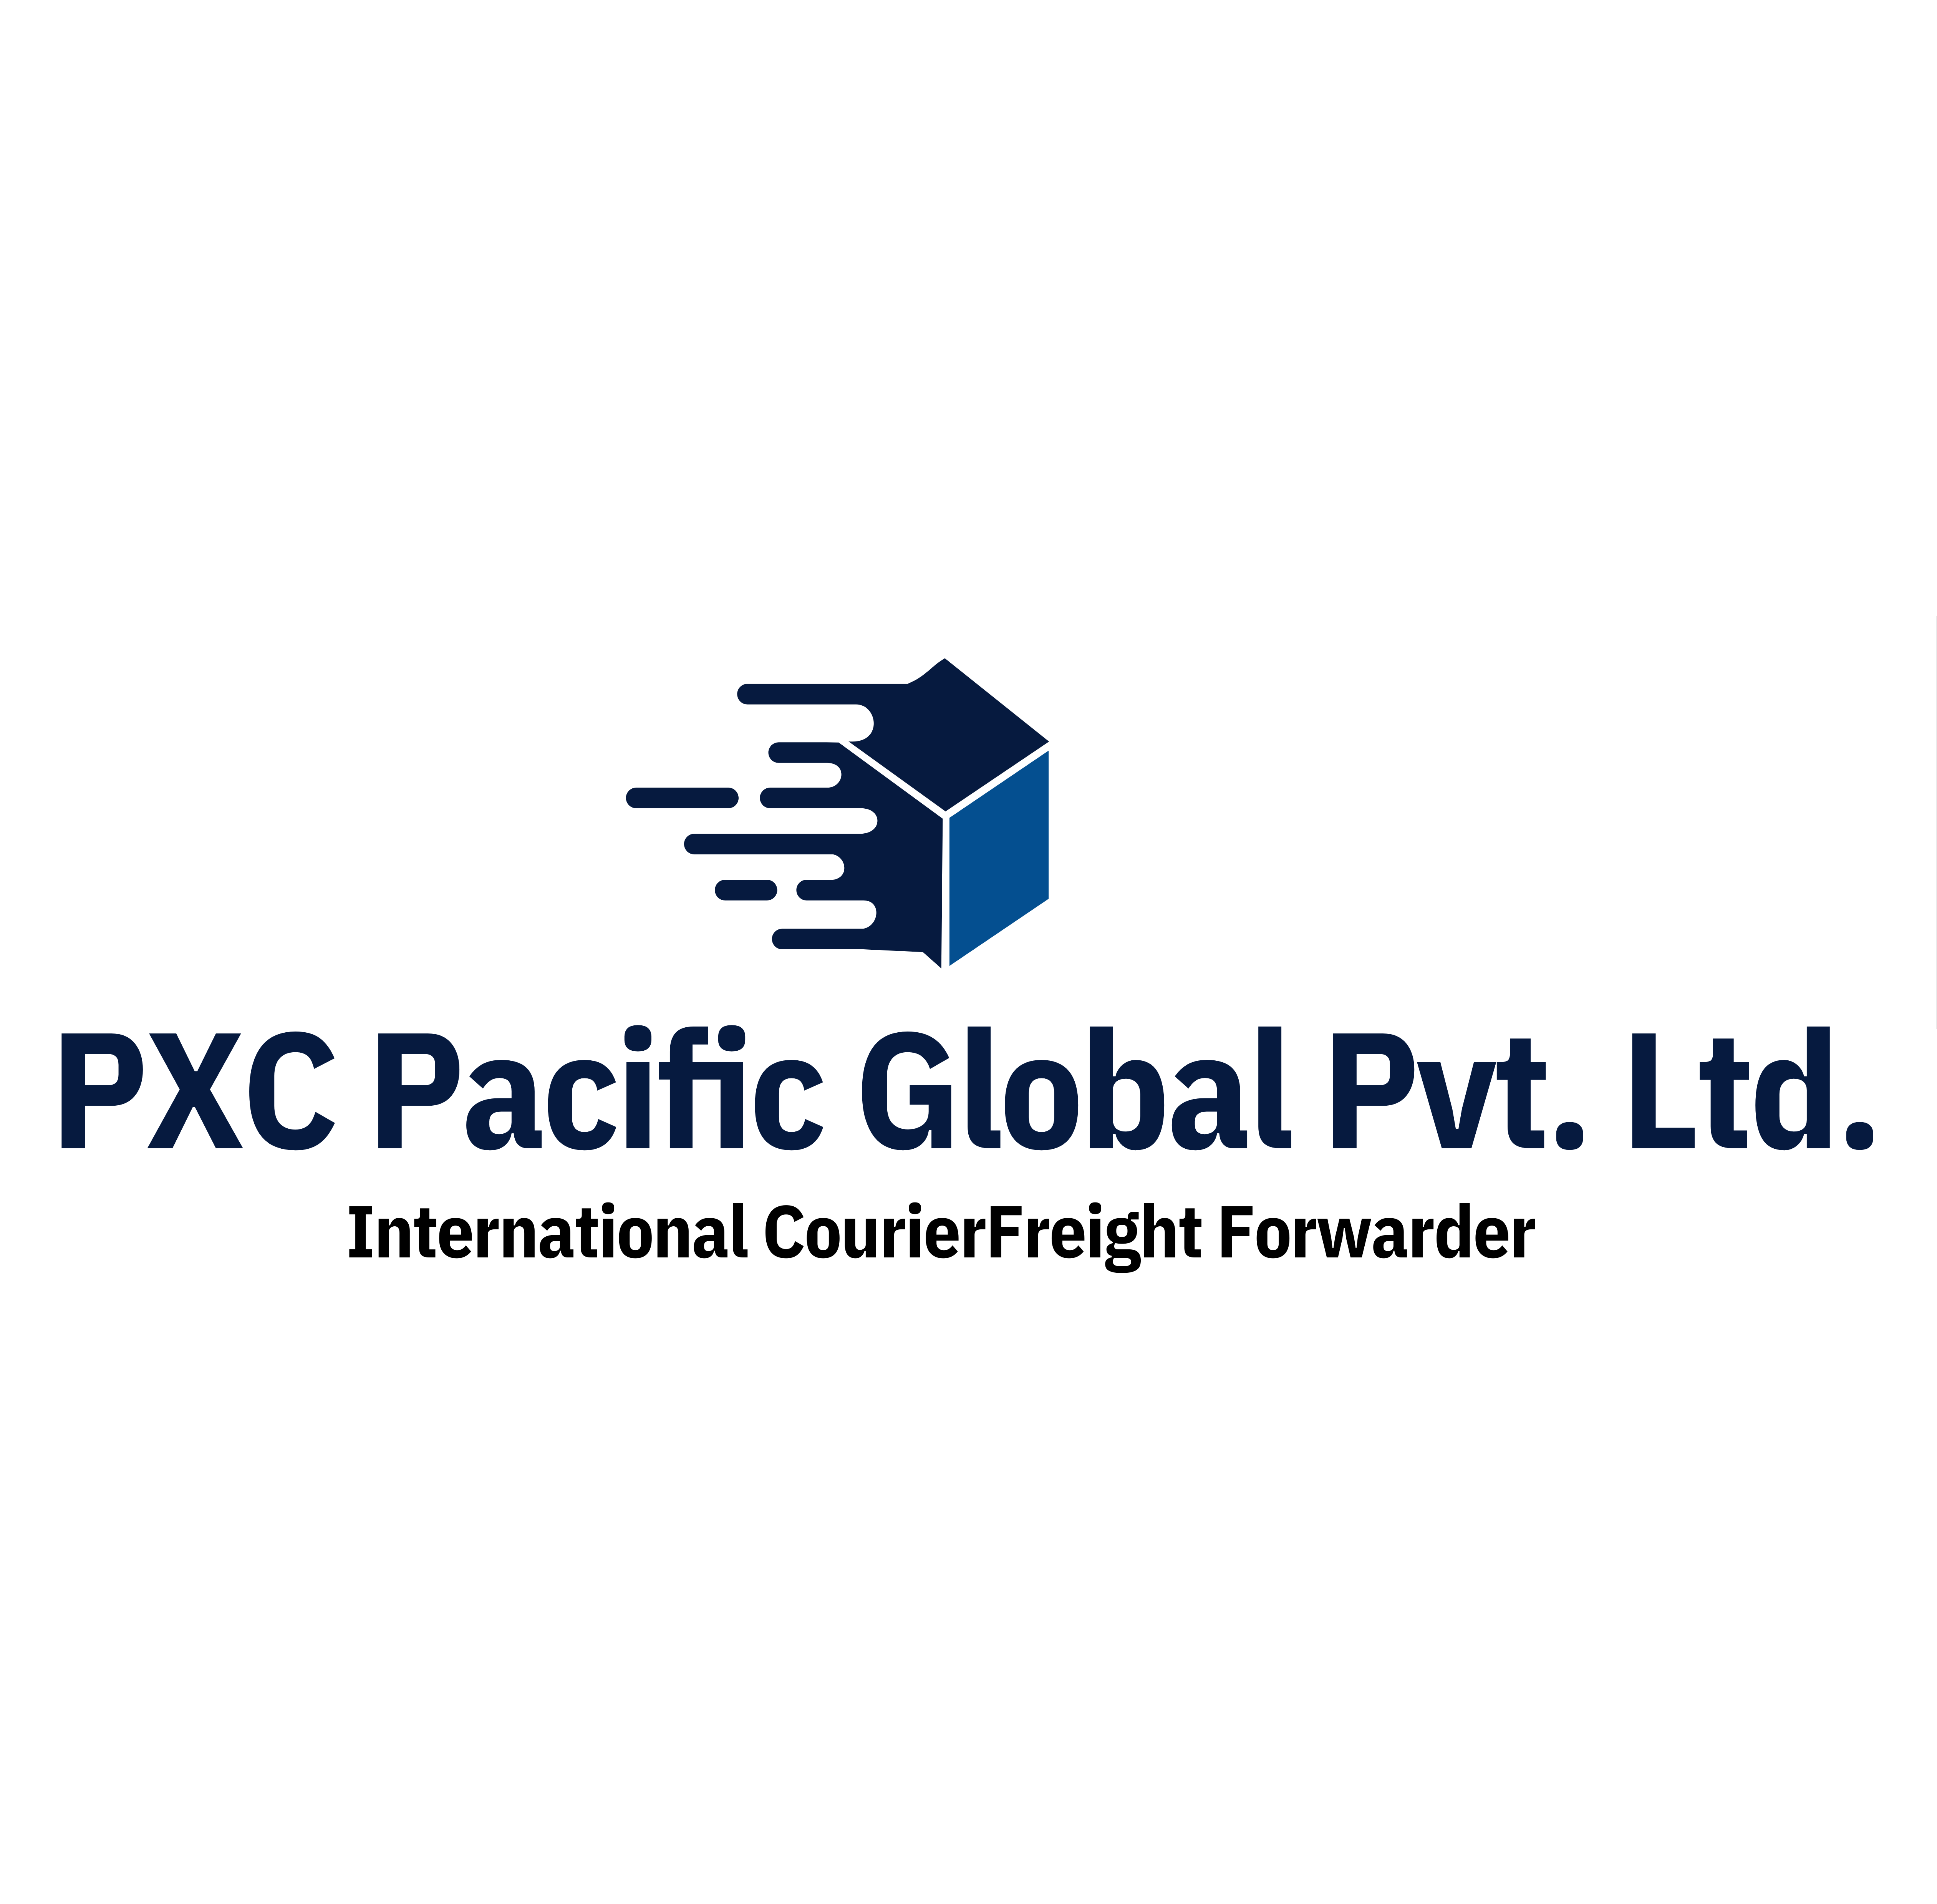 PXC PACIFIC GLOBAL PVT. LTD.